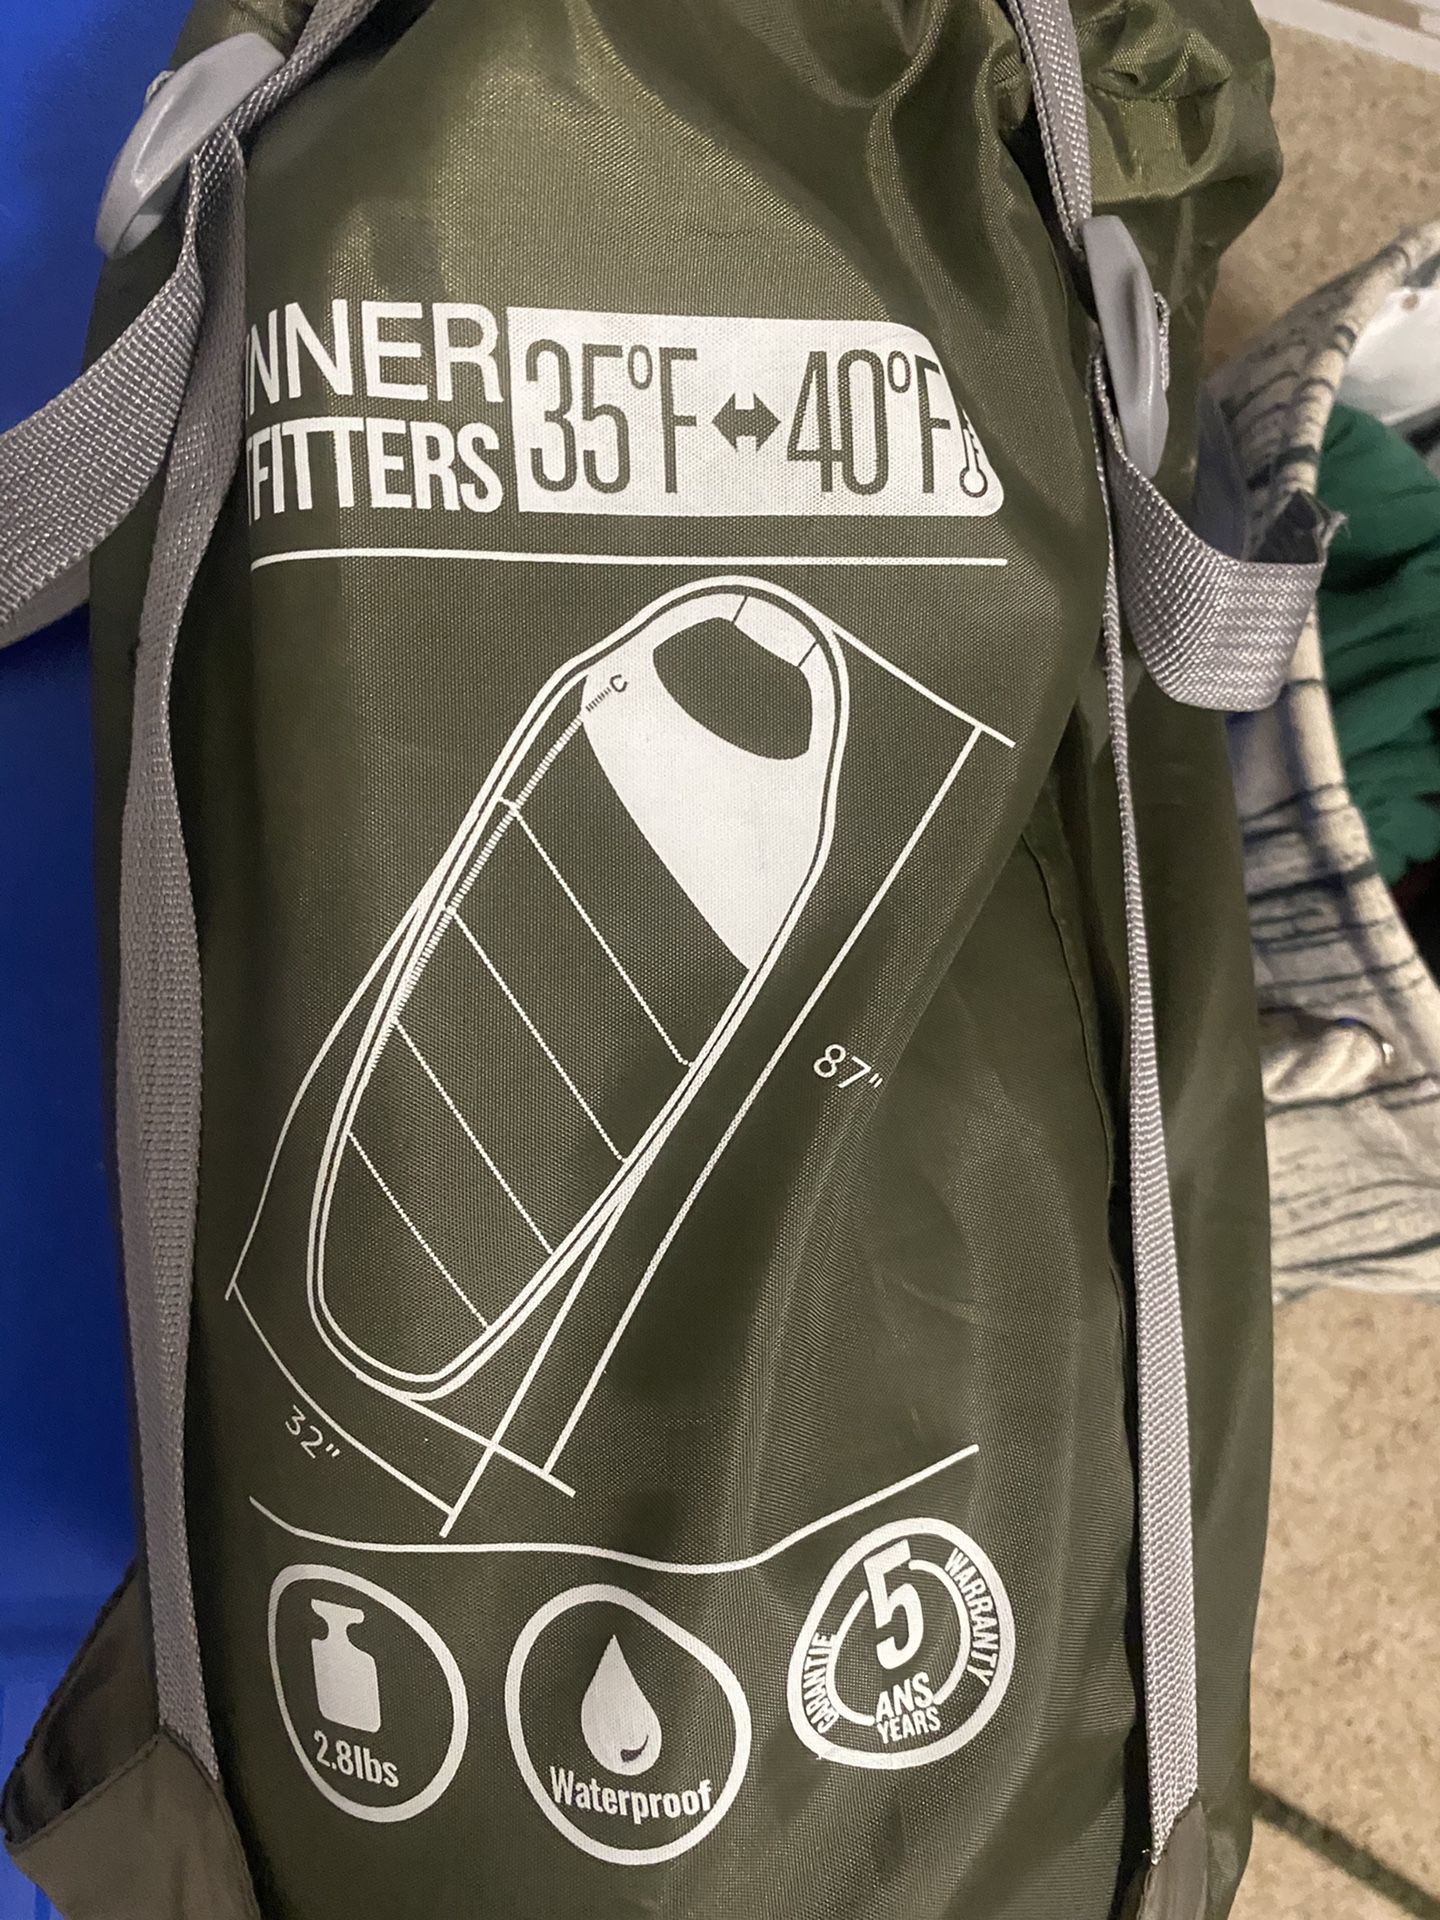 Winner Outfitters 35 degree sleeping bag